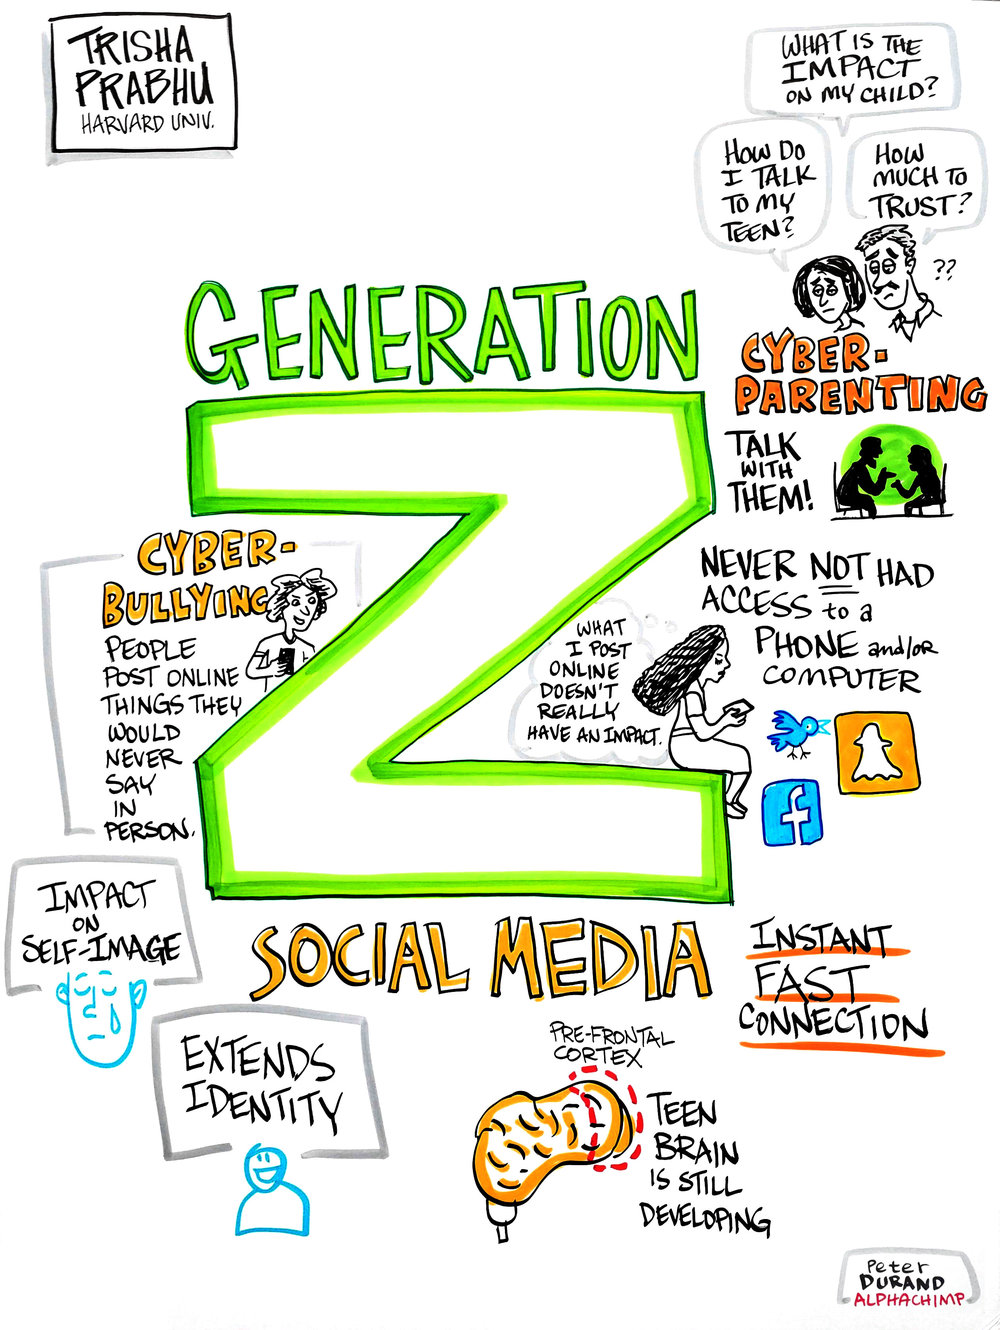 Keynote: Keeping Pace with Gen Z on Digital Media: An Inside Perspective